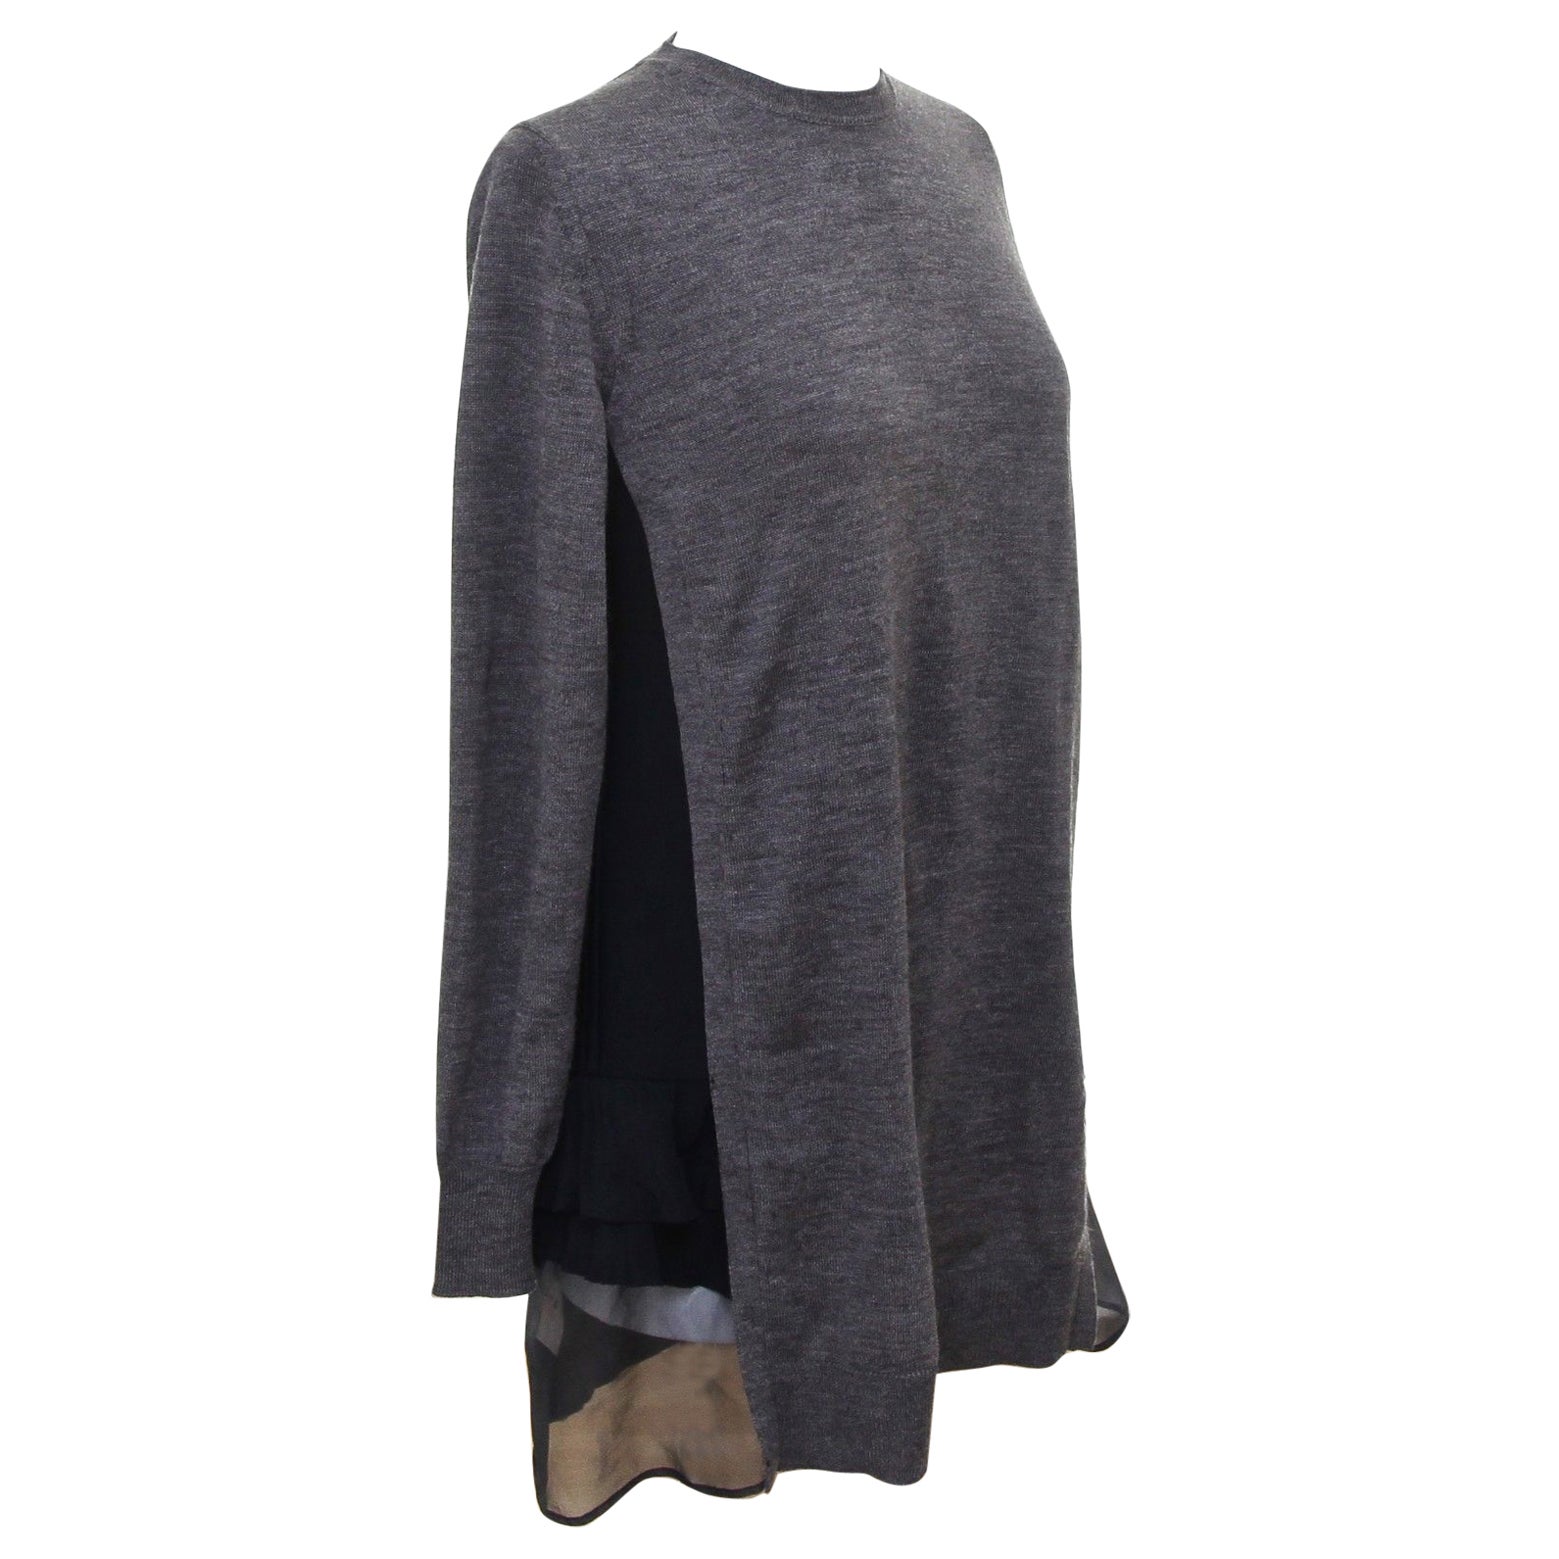 MIU MIU Top Sweater Knit Tunic Wool Grey Navy Silk Long Sleeve Sz 36 For Sale